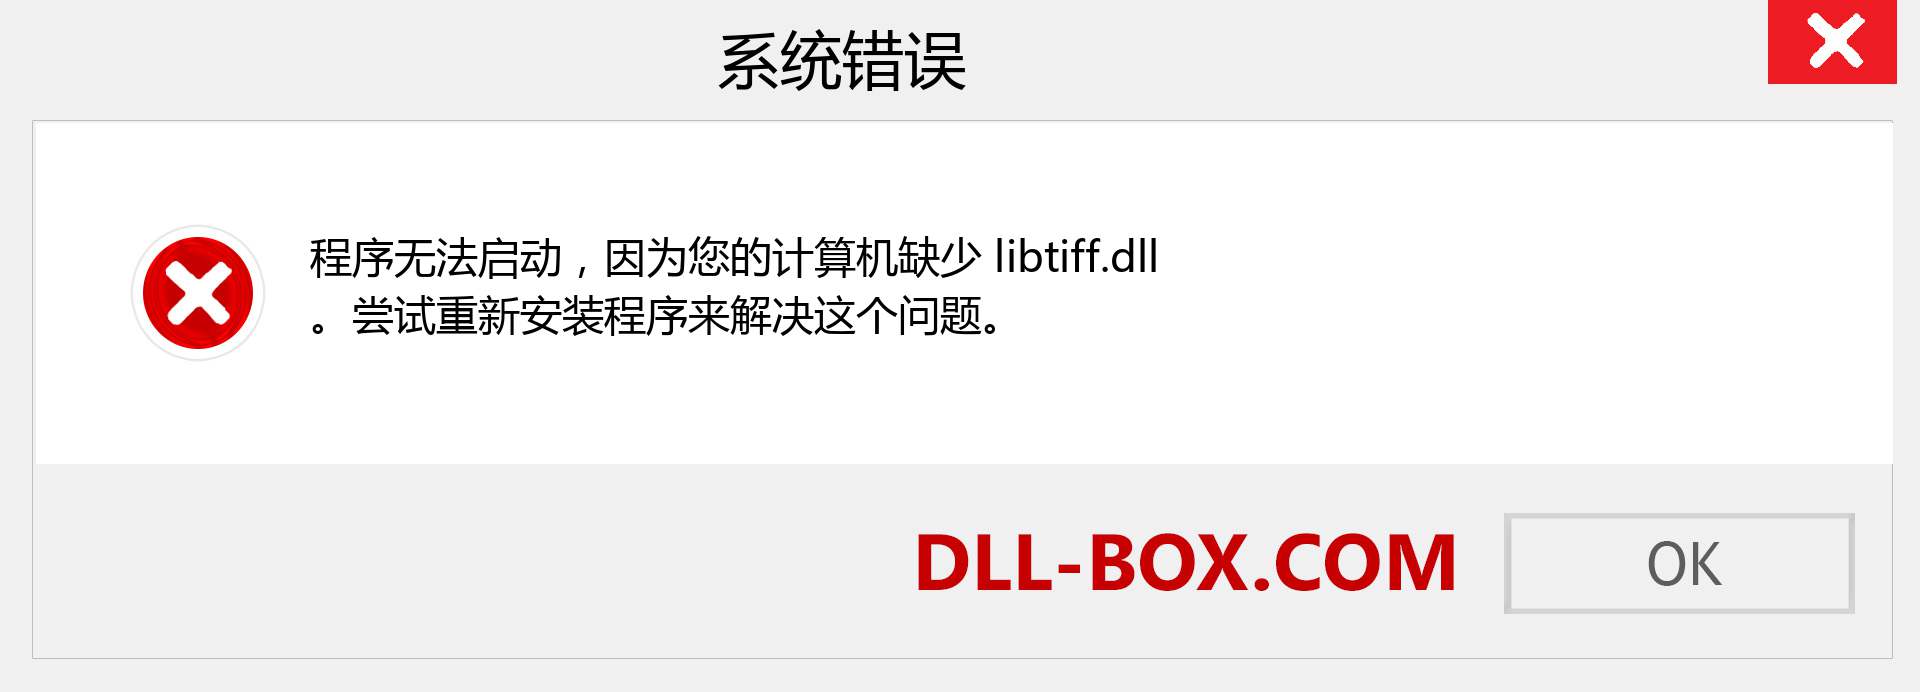 libtiff.dll 文件丢失？。 适用于 Windows 7、8、10 的下载 - 修复 Windows、照片、图像上的 libtiff dll 丢失错误